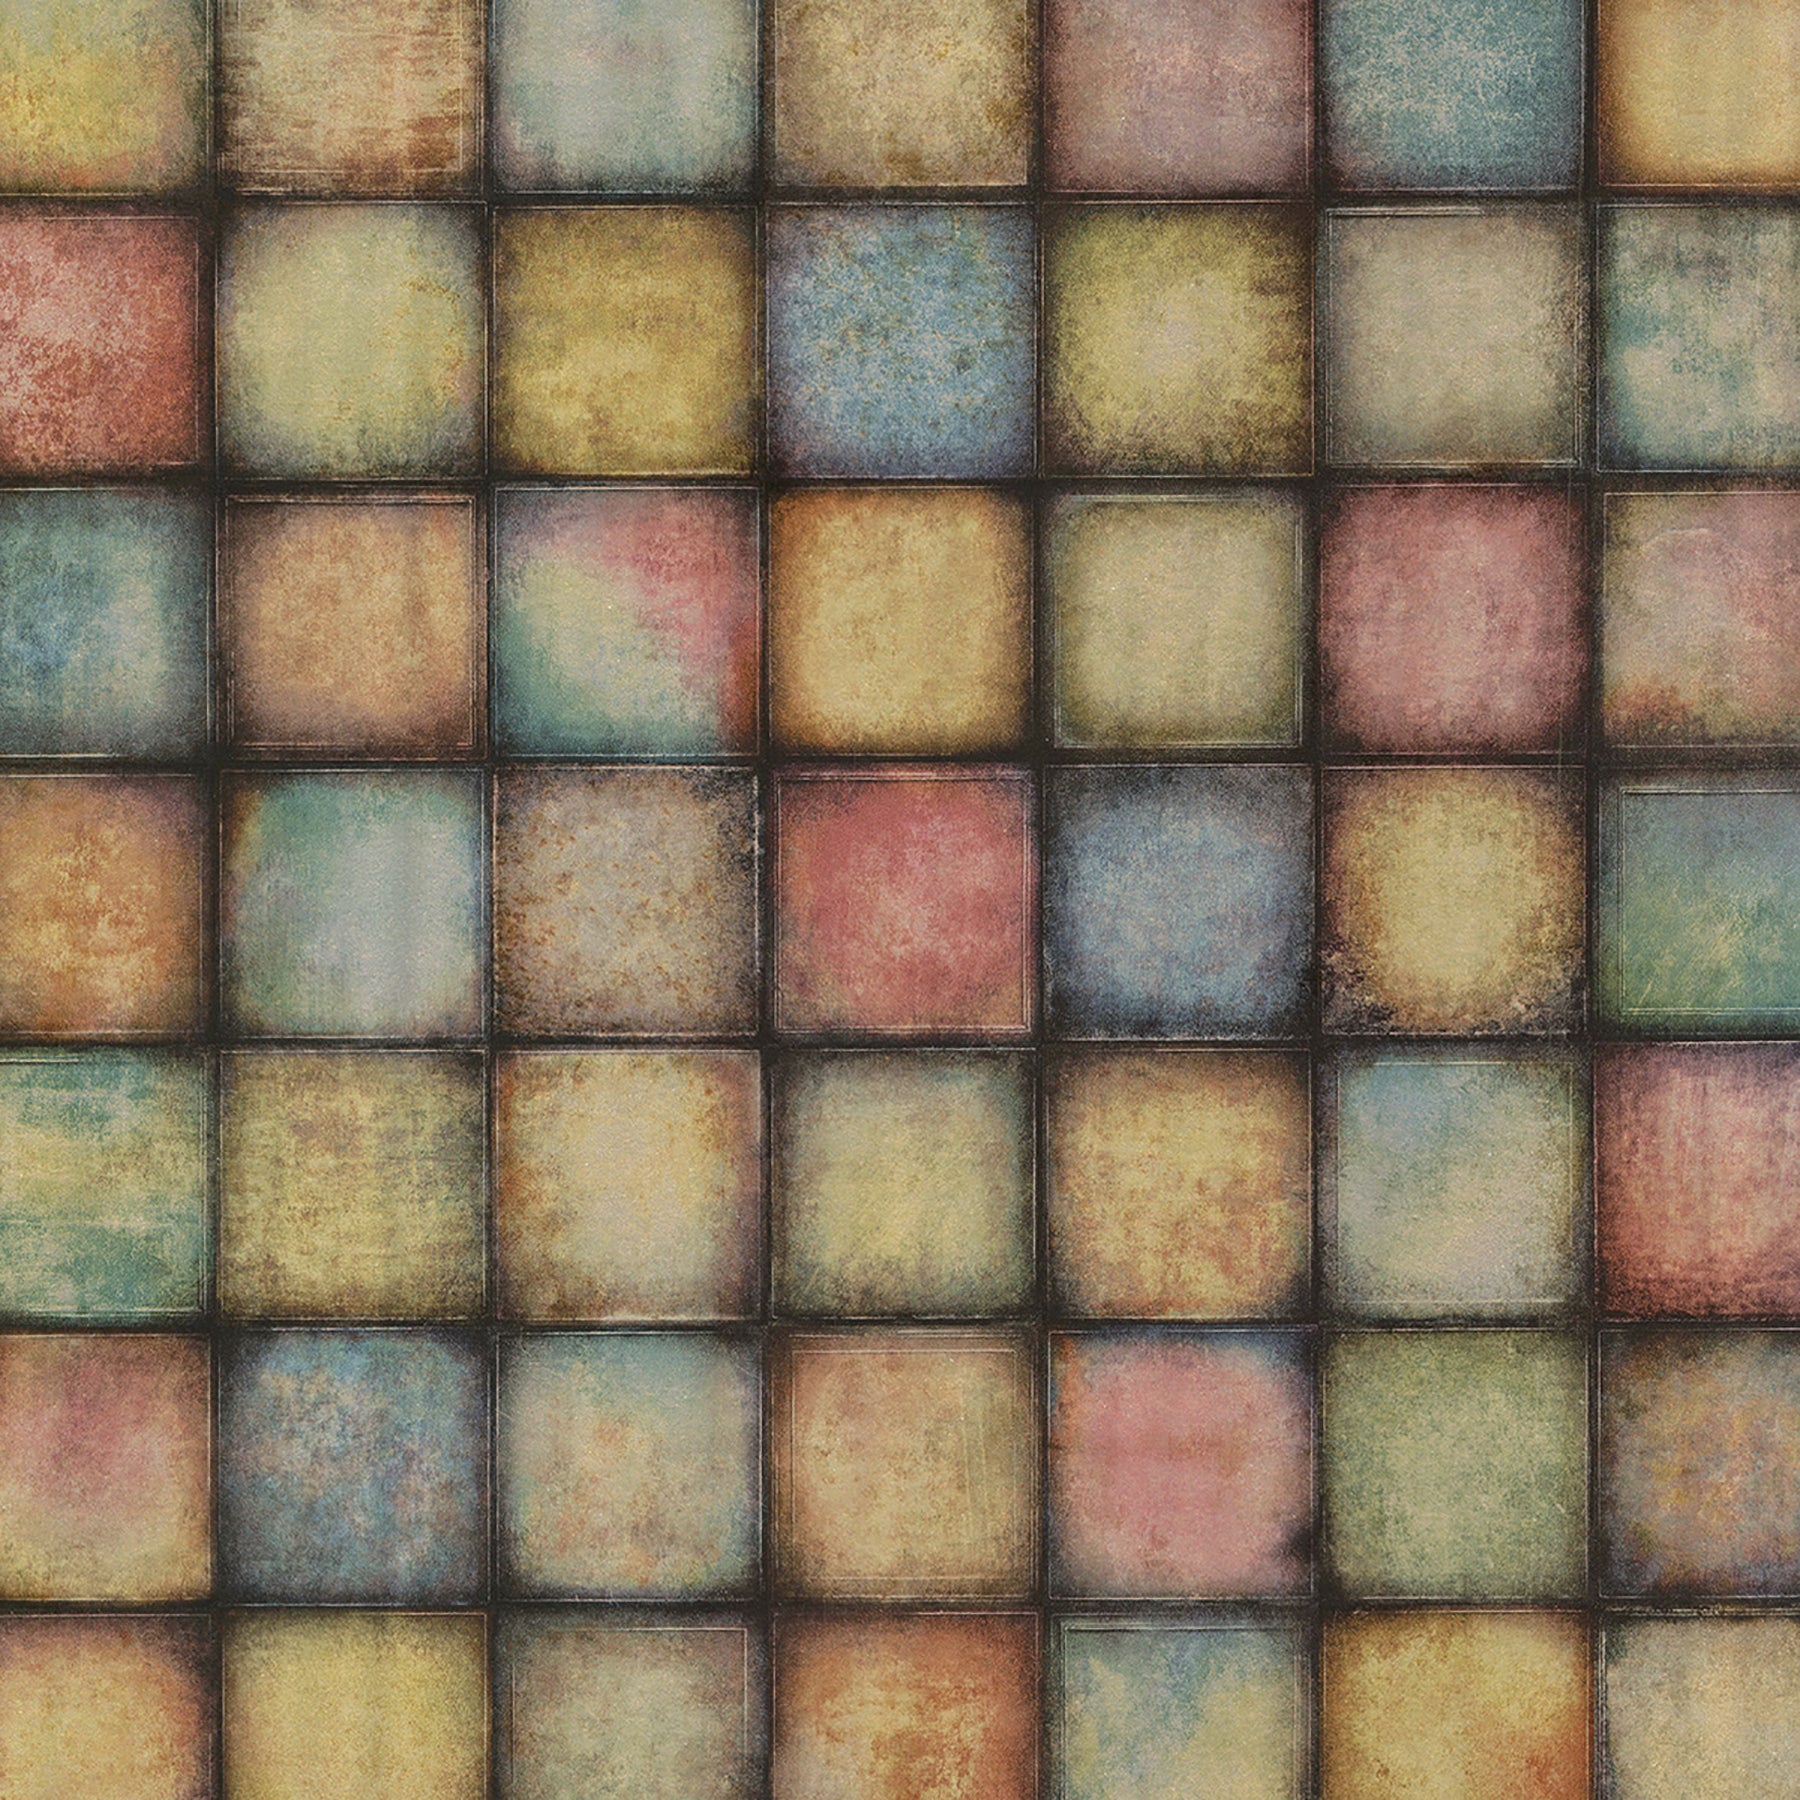 Order 2766-24080 KItchen  Bath Essentials Soucy Multicolor Tiles Brewster Wallpaper